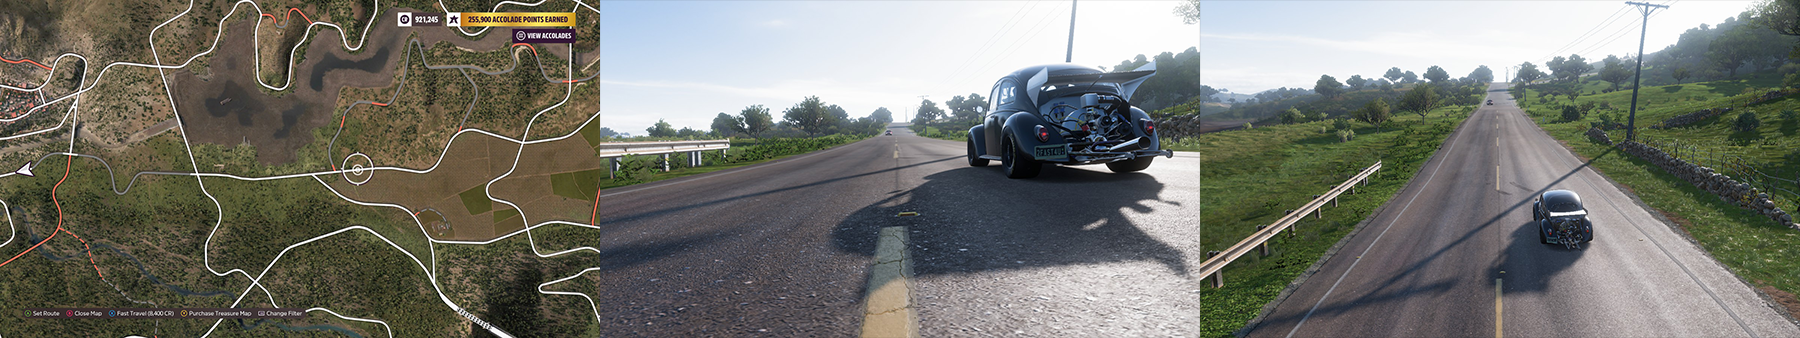 Forza Horizon 5 - Drag Racer Comprehensive Guide - Multiplayer & Walkthroughs - Immersive 